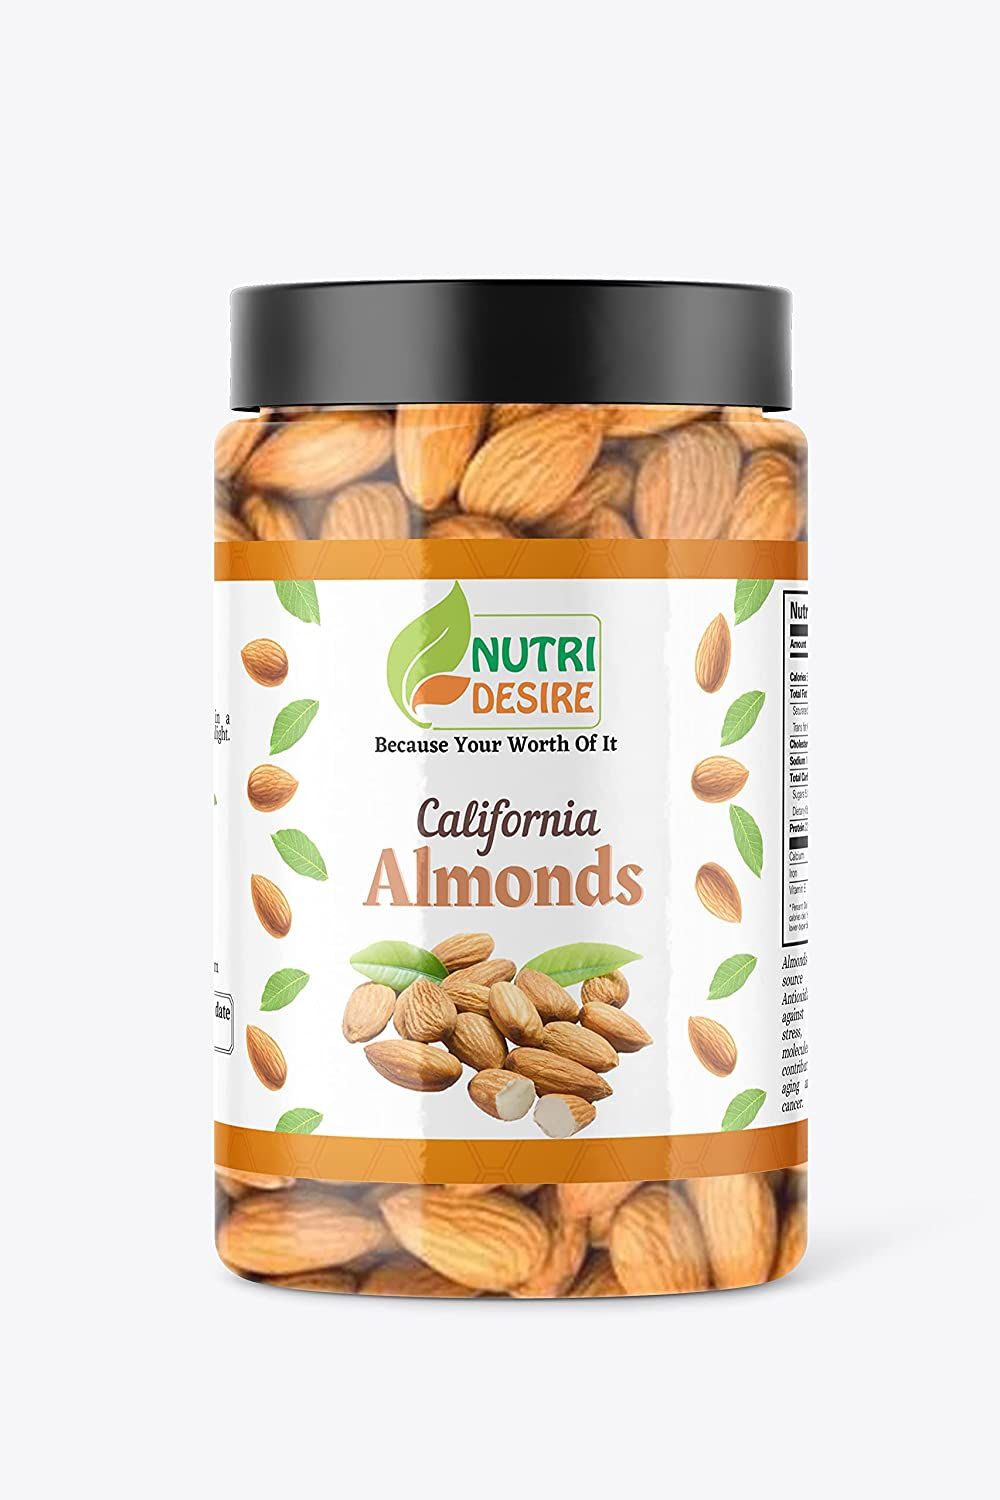 Nutri Desire California Almond Image